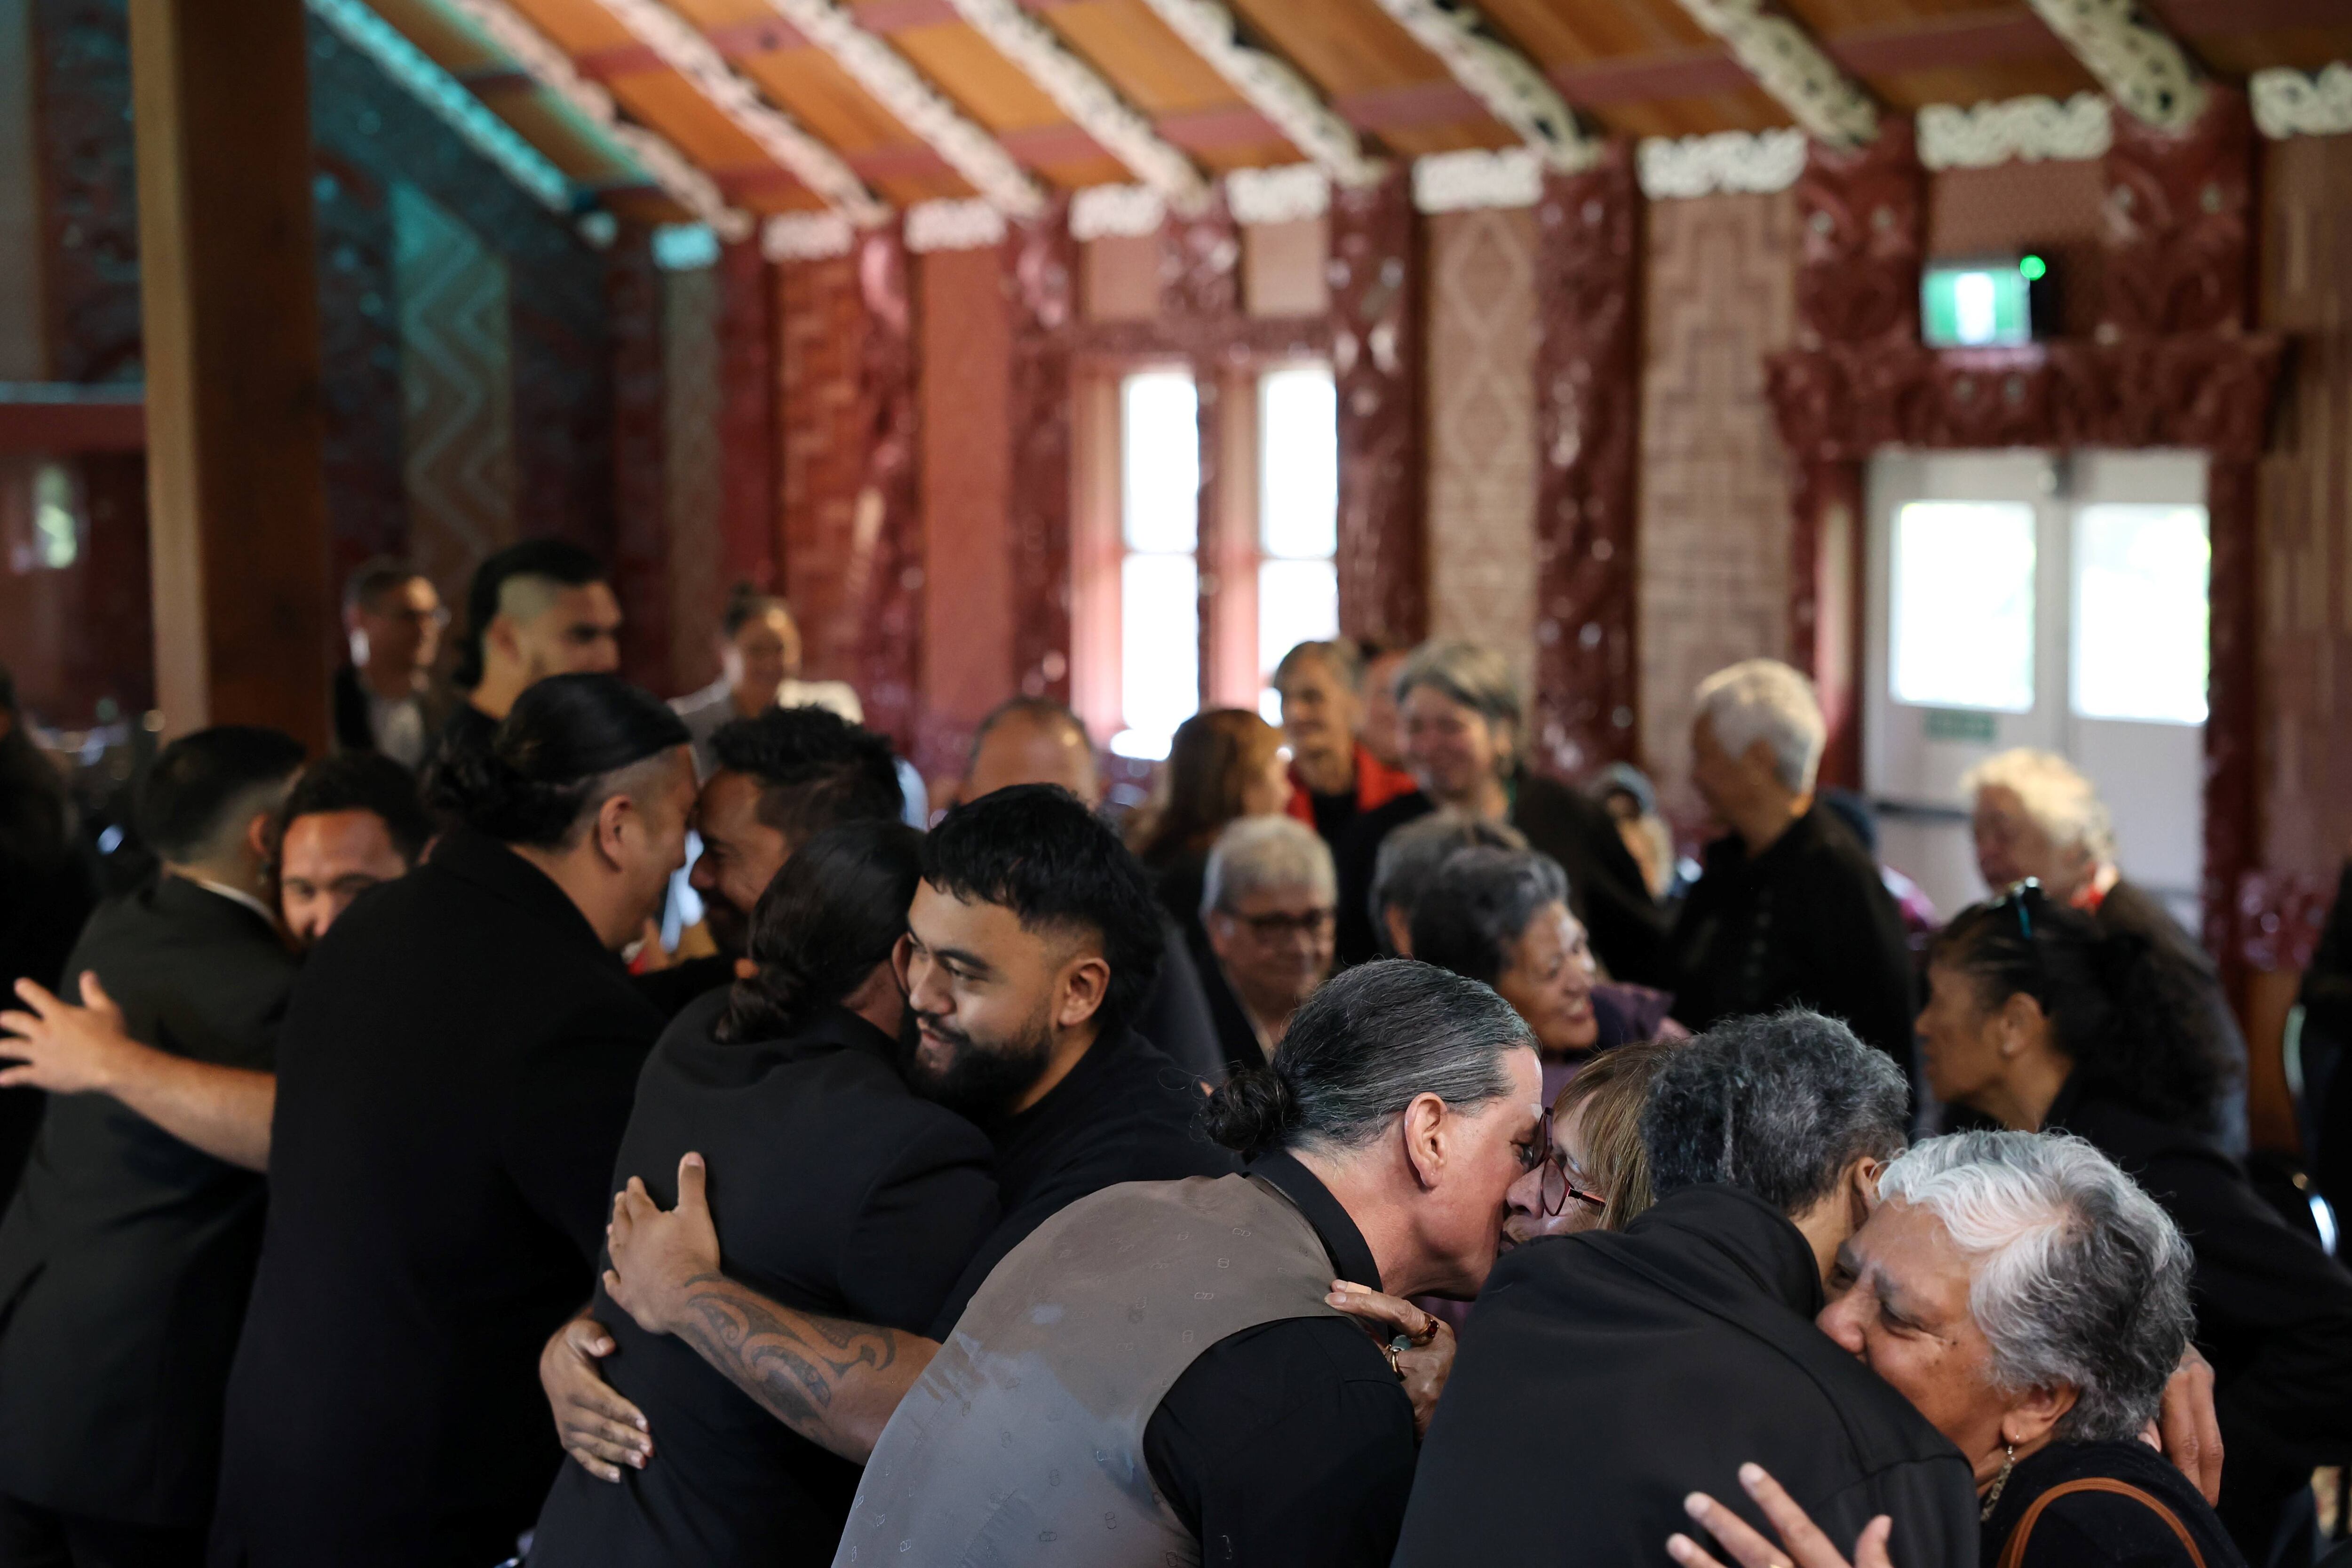 Whānau gathered in Te Aronui a Rua whare following the conclusion of the pōhiri for Grant Marunui.